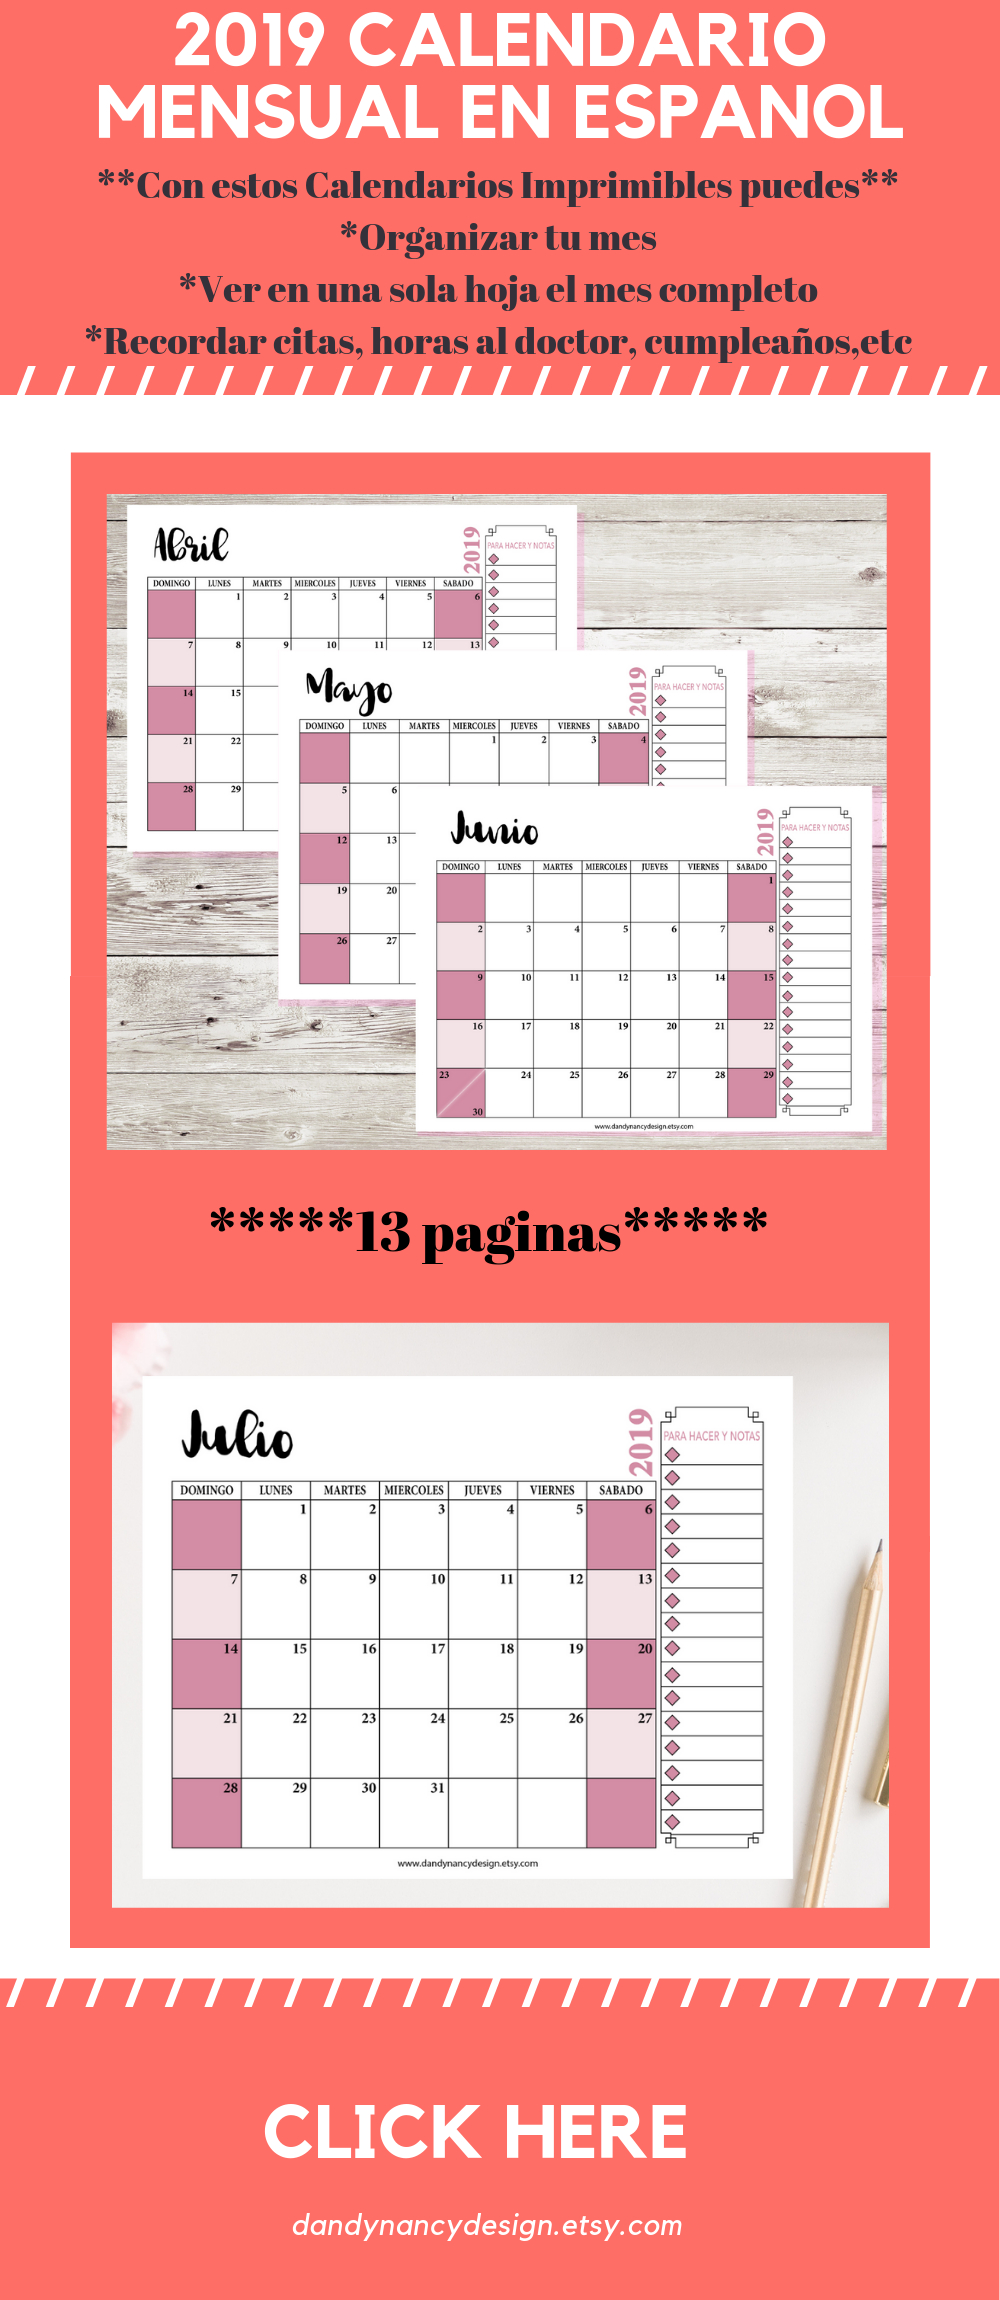 Este Calendario Mensual En Espanol De 12 Meses Del Ano 2019 within Script Calendario Photoshop